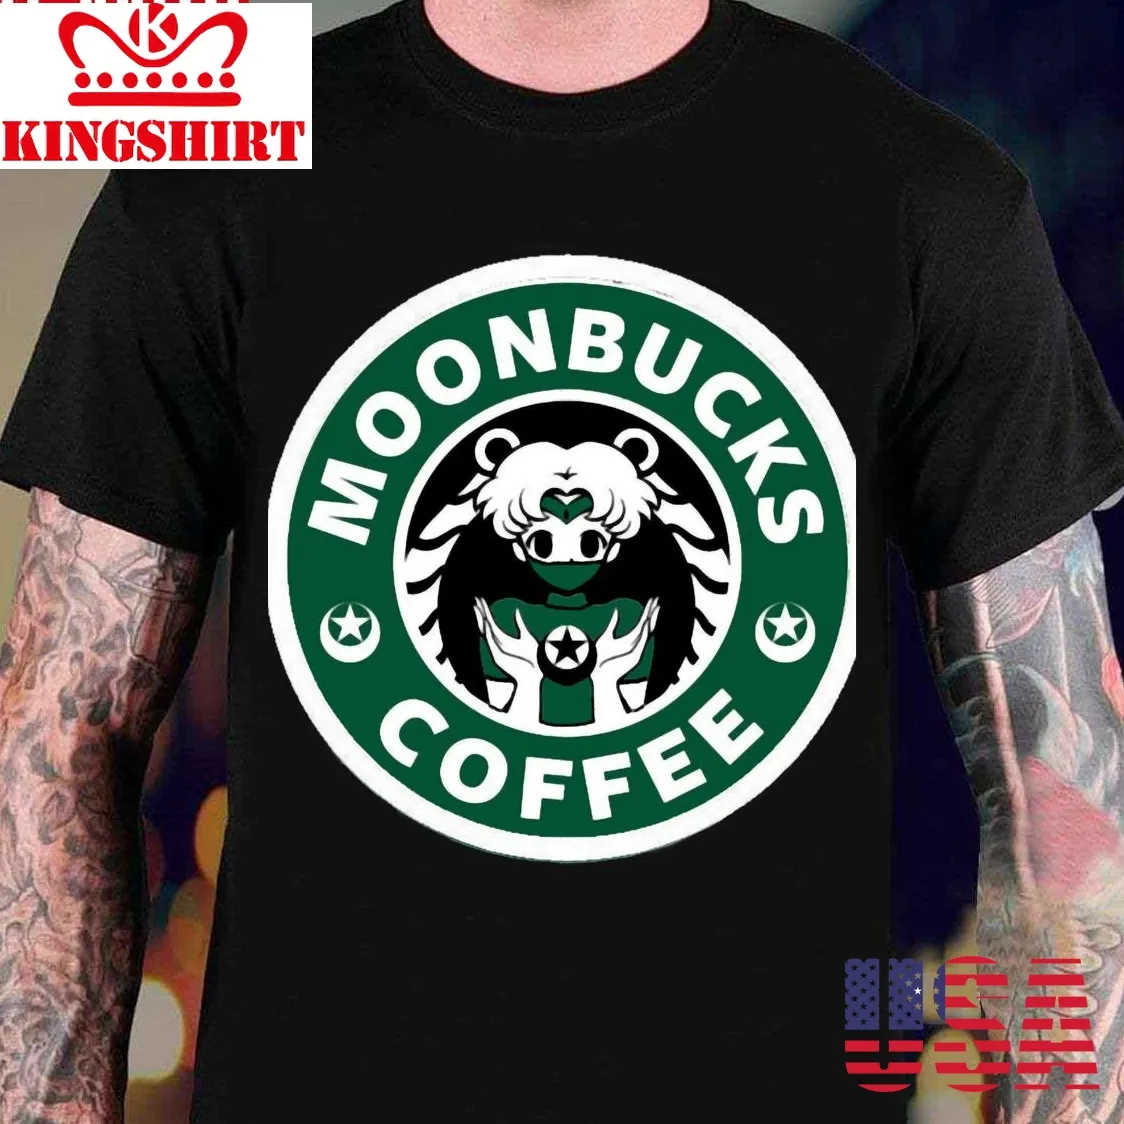 Moonbucks Coffee &8216; Manga Unisex T Shirt